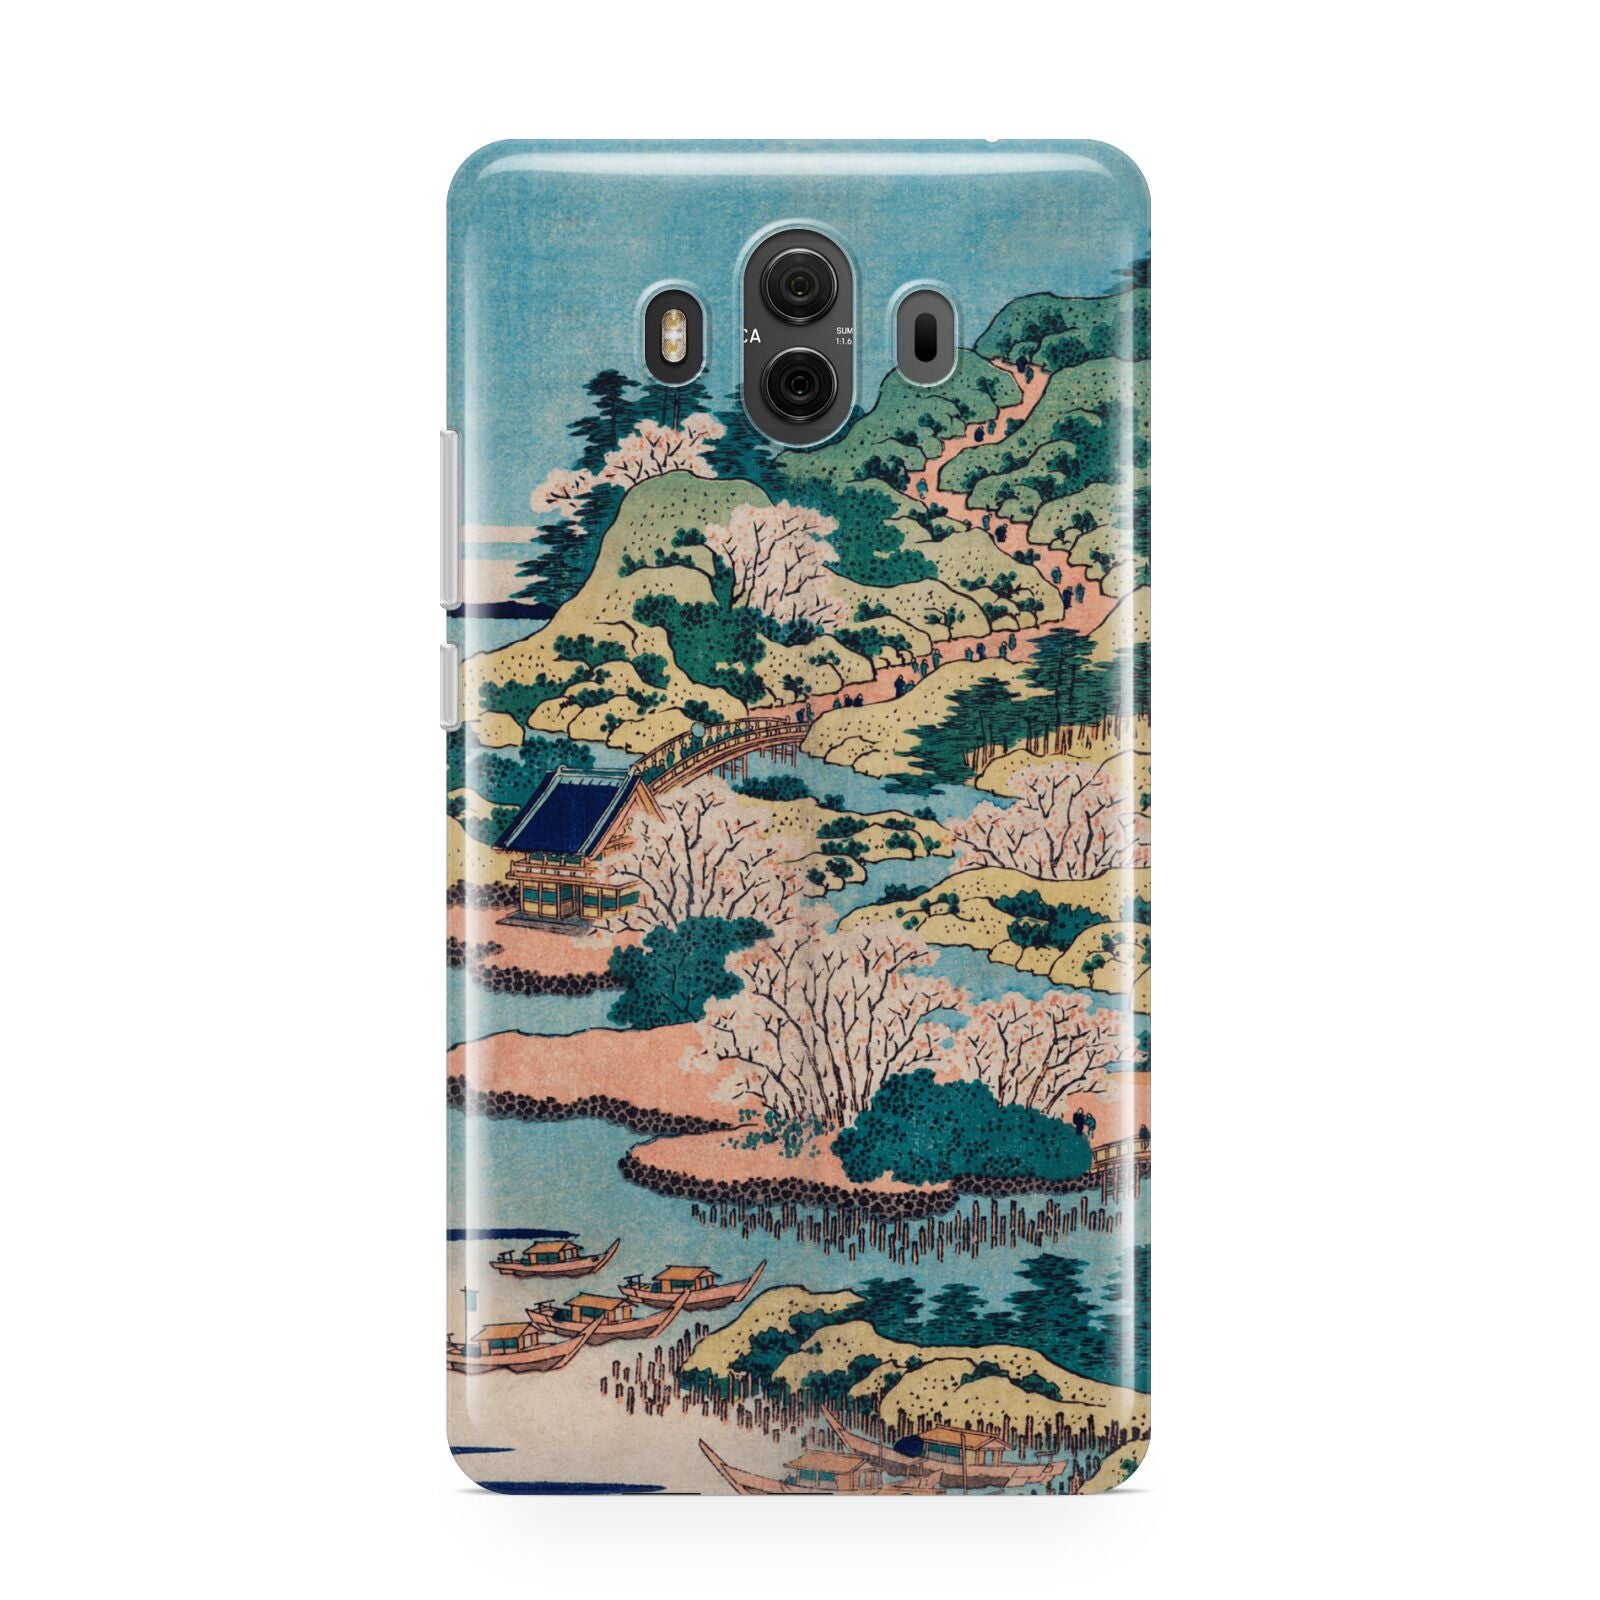 Coastal Community By Katsushika Hokusai Huawei Mate 10 Protective Phone Case